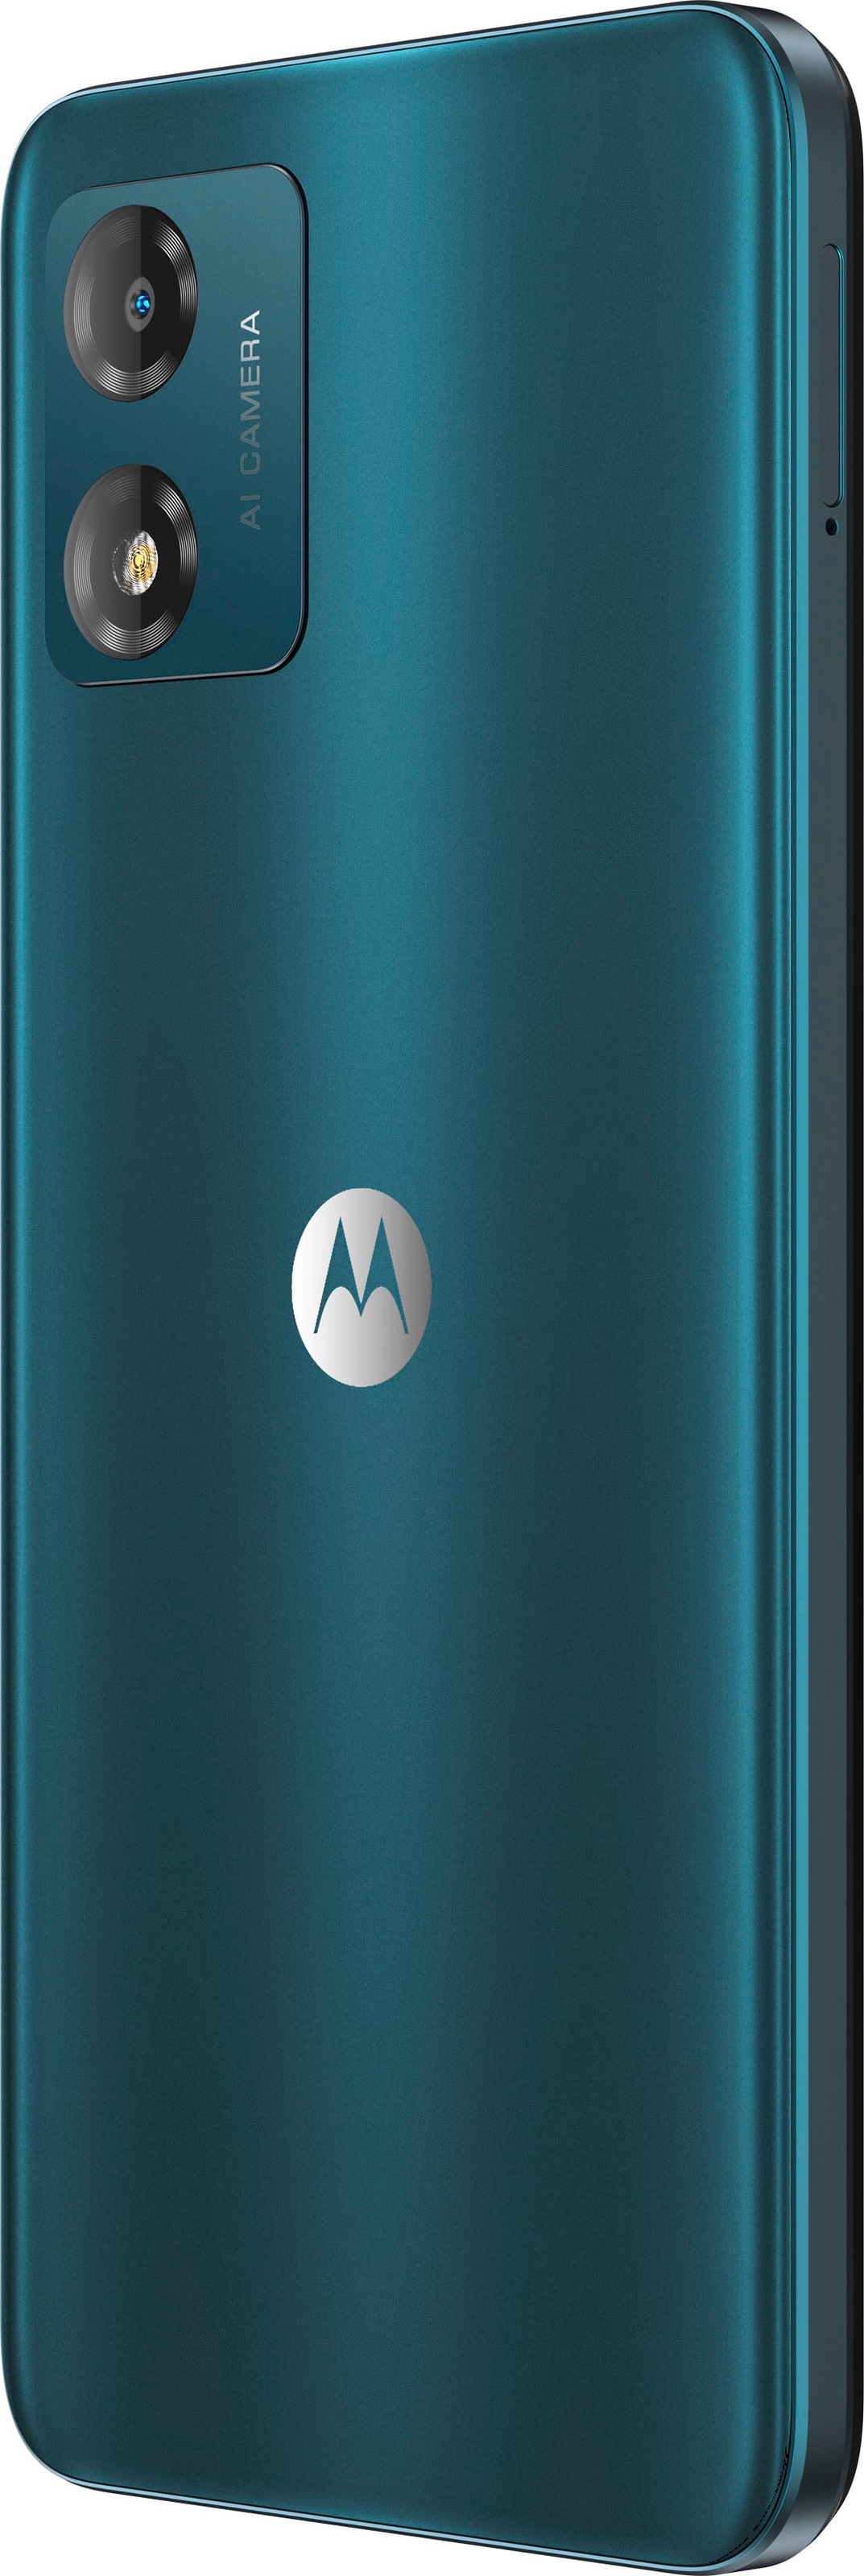 Motorola Smartphone »E13«, Aurora Green, 16,56 cm/6,52 Zoll, 64 GB Speicherplatz, 13 MP Kamera